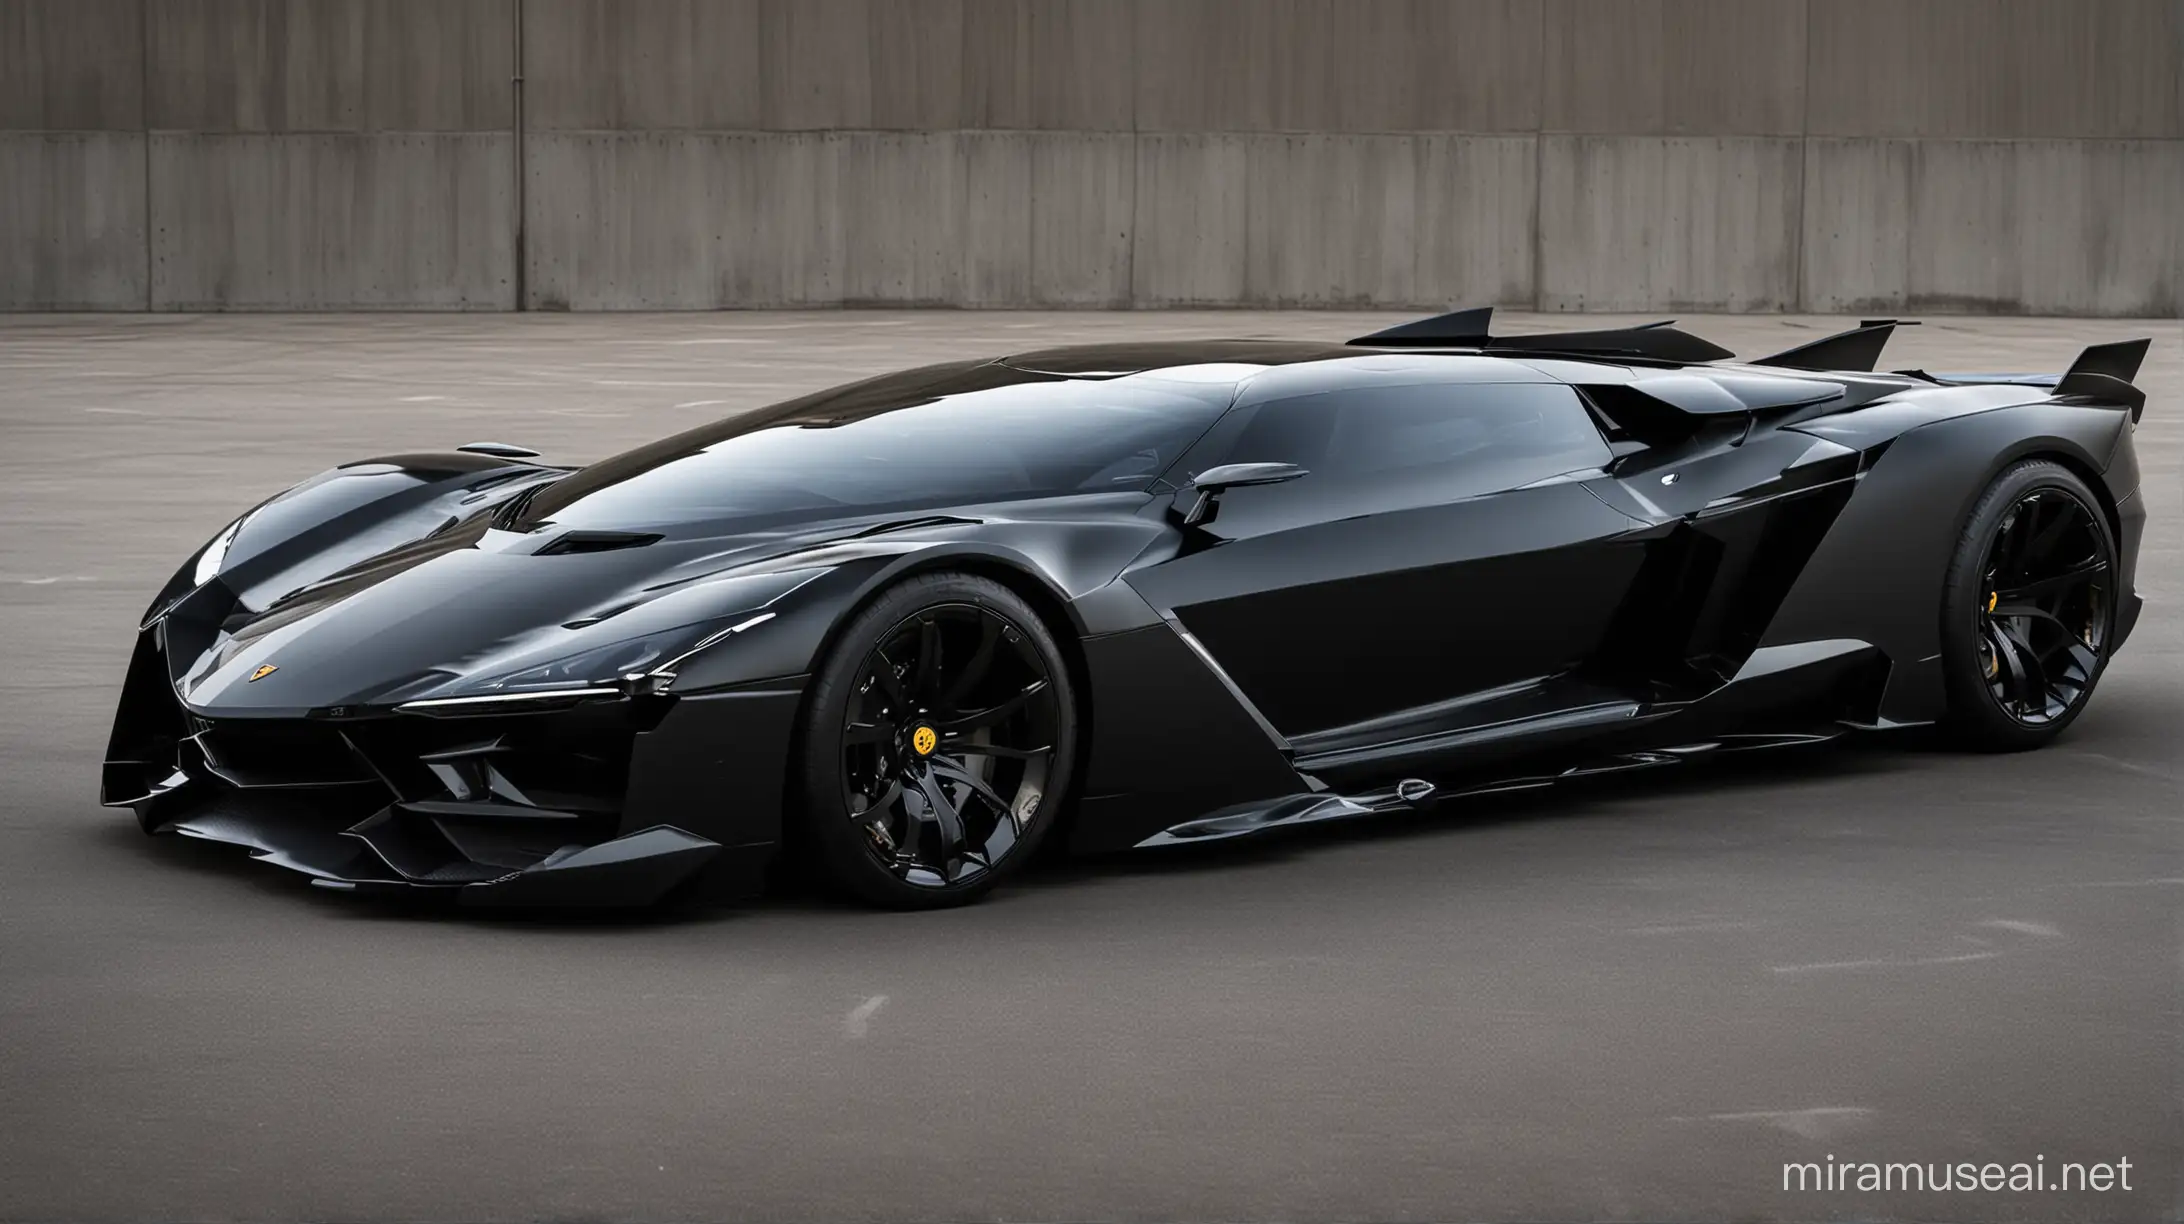 Futuristic Concept Lamborghini Batmobile in Sleek Black Design